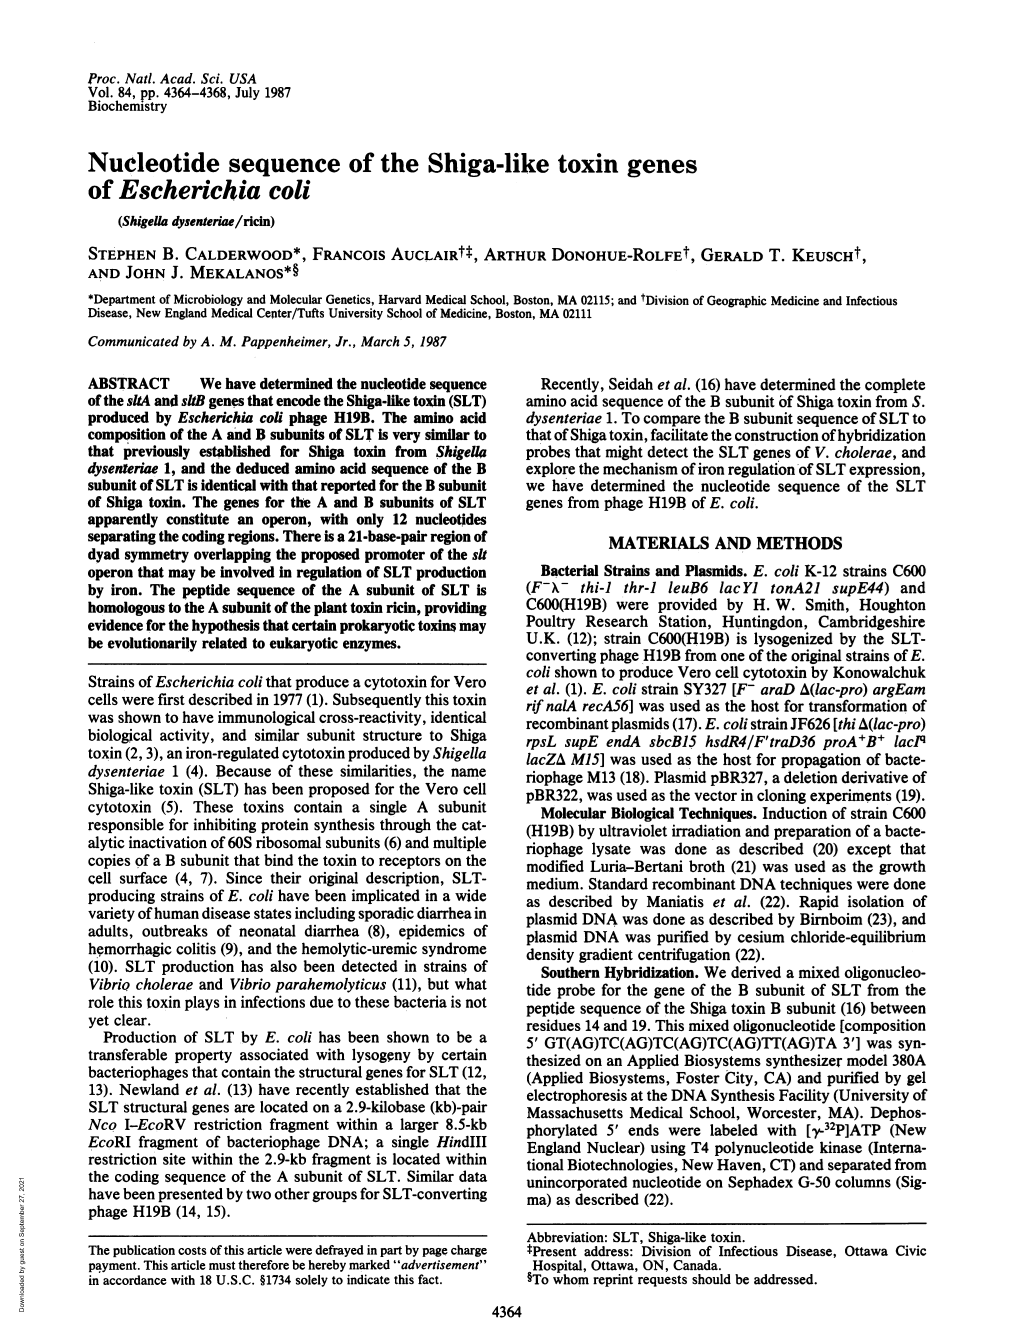 Nucleotide Sequence of the Shiga-Like Toxin Genes of Escherichia Coli (Shigella Dysenteriae/Ricin) STEPHEN B